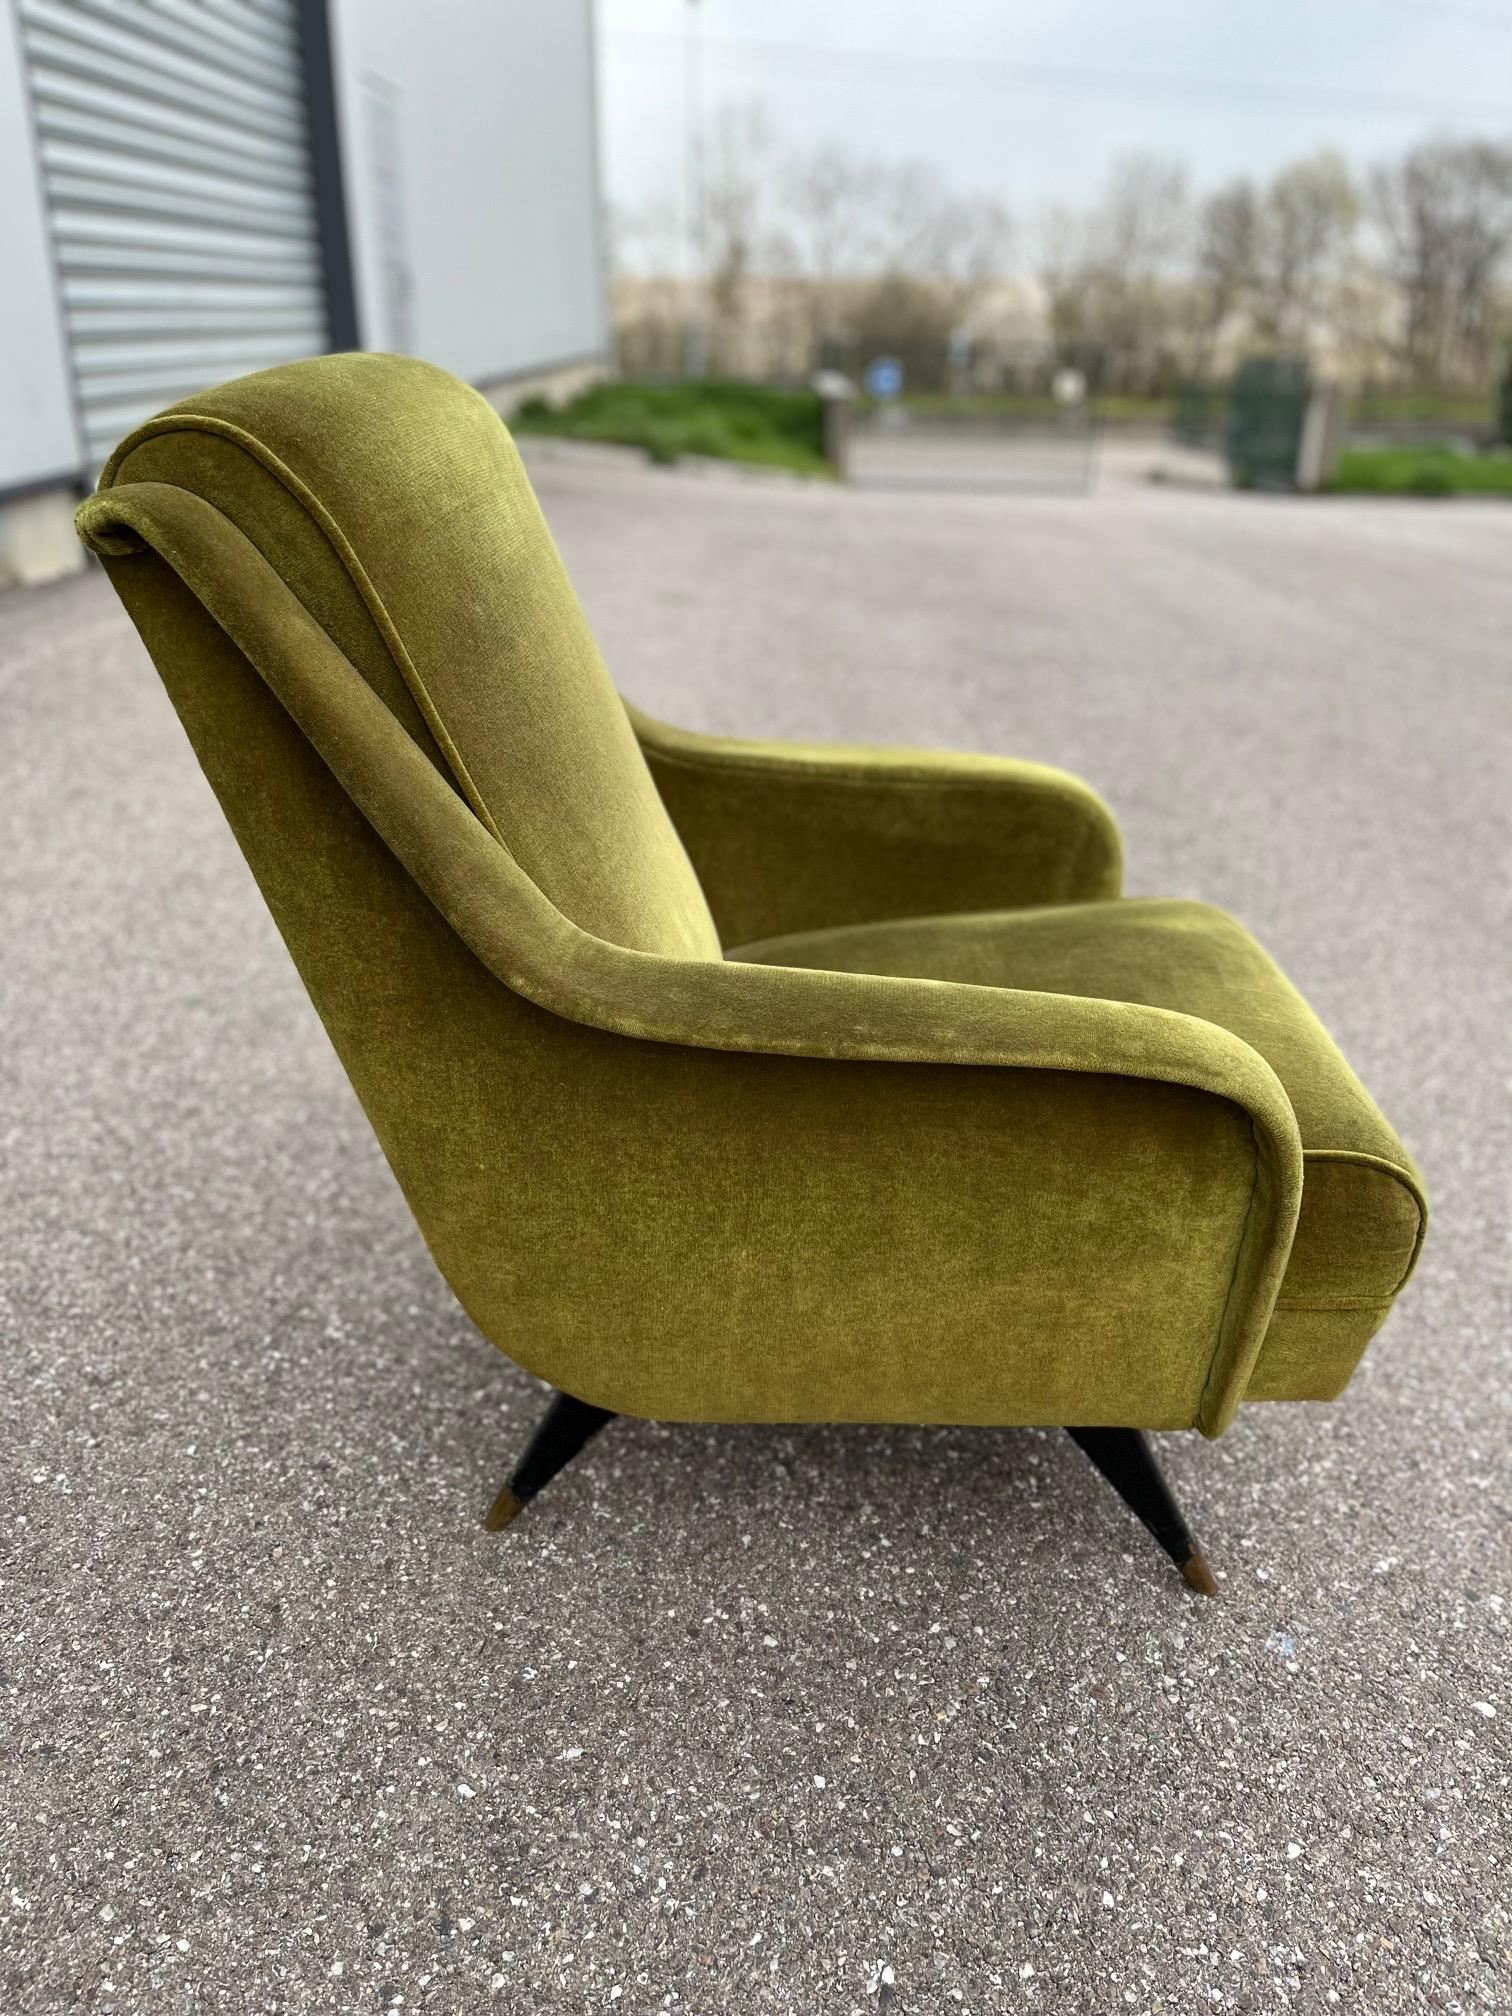 Mid-Century Modern Erton Armchair from the 1950's